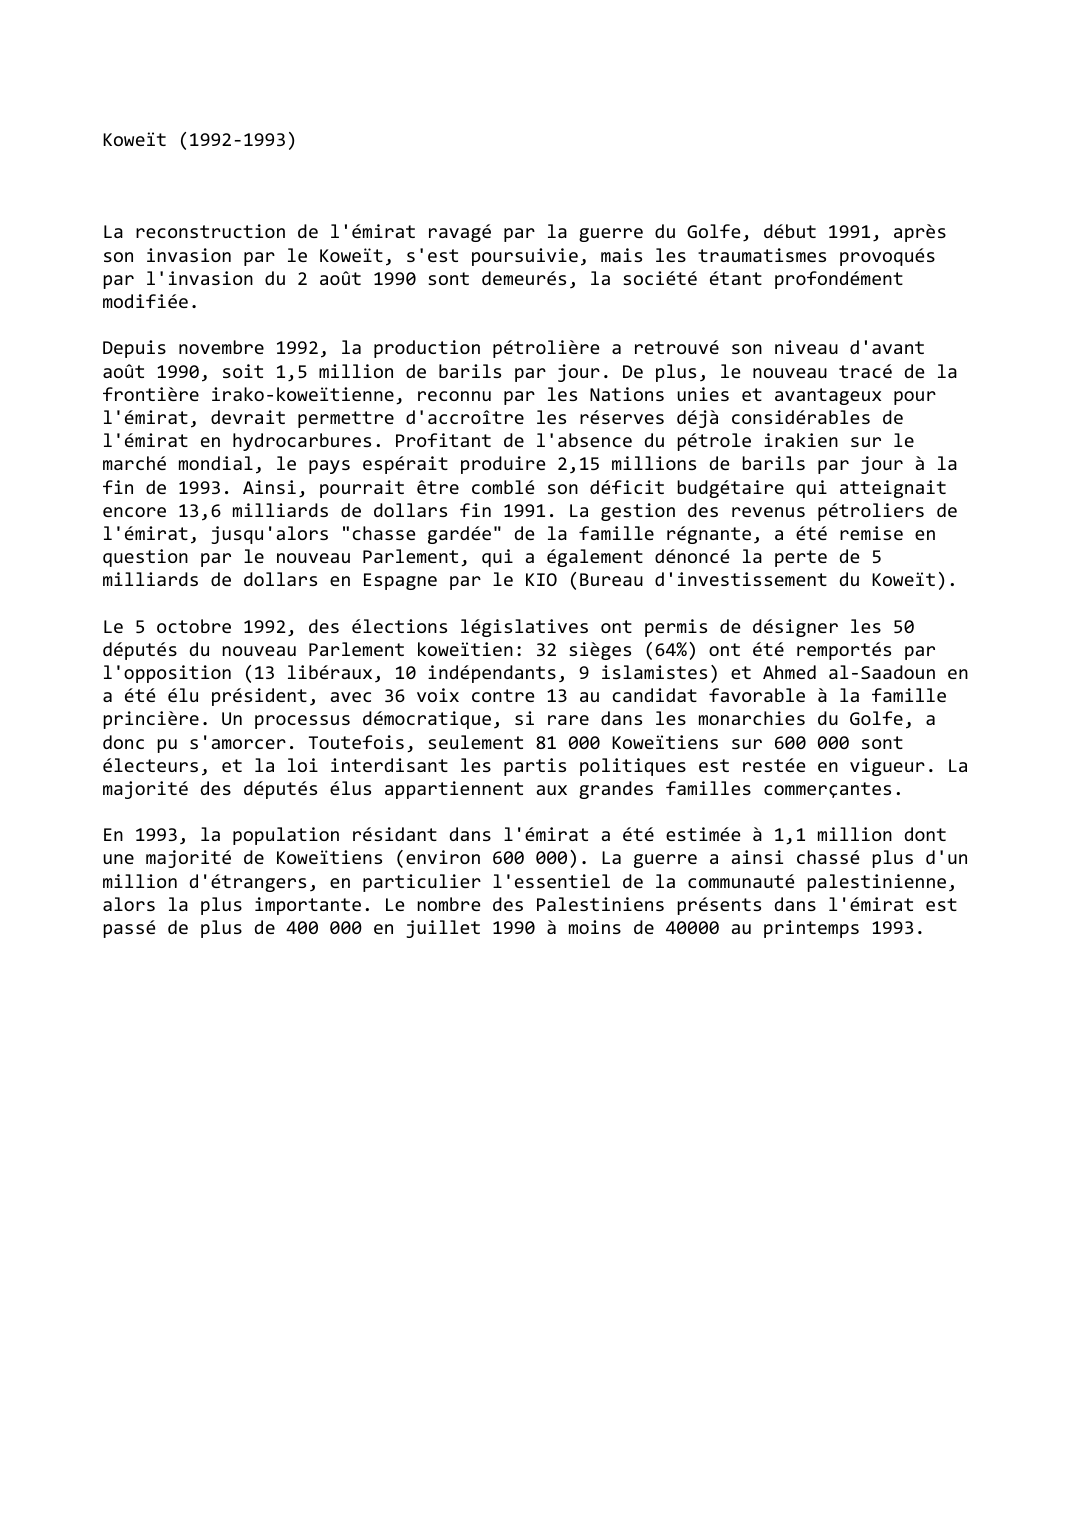 Prévisualisation du document Koweït (1992-1993)